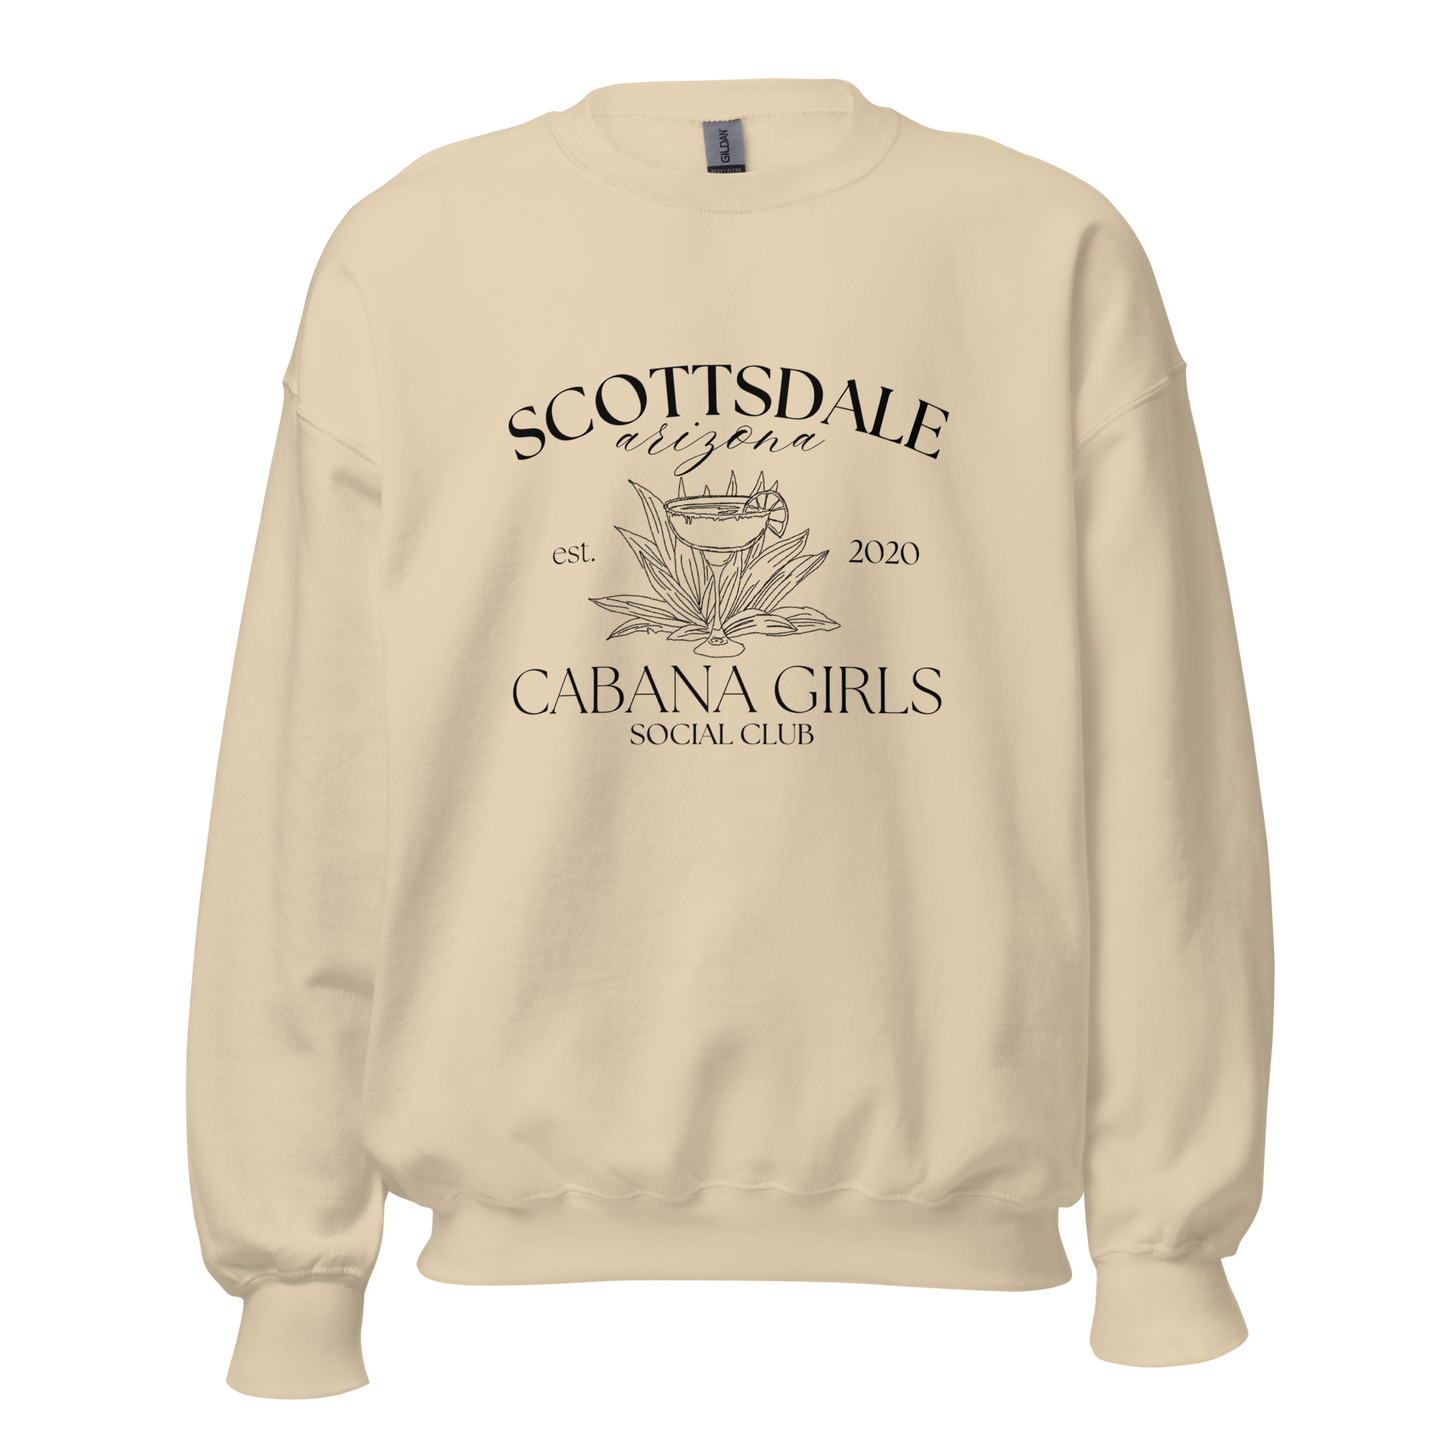 Social Club Cabana Girls Scottsdale Sweatshirt